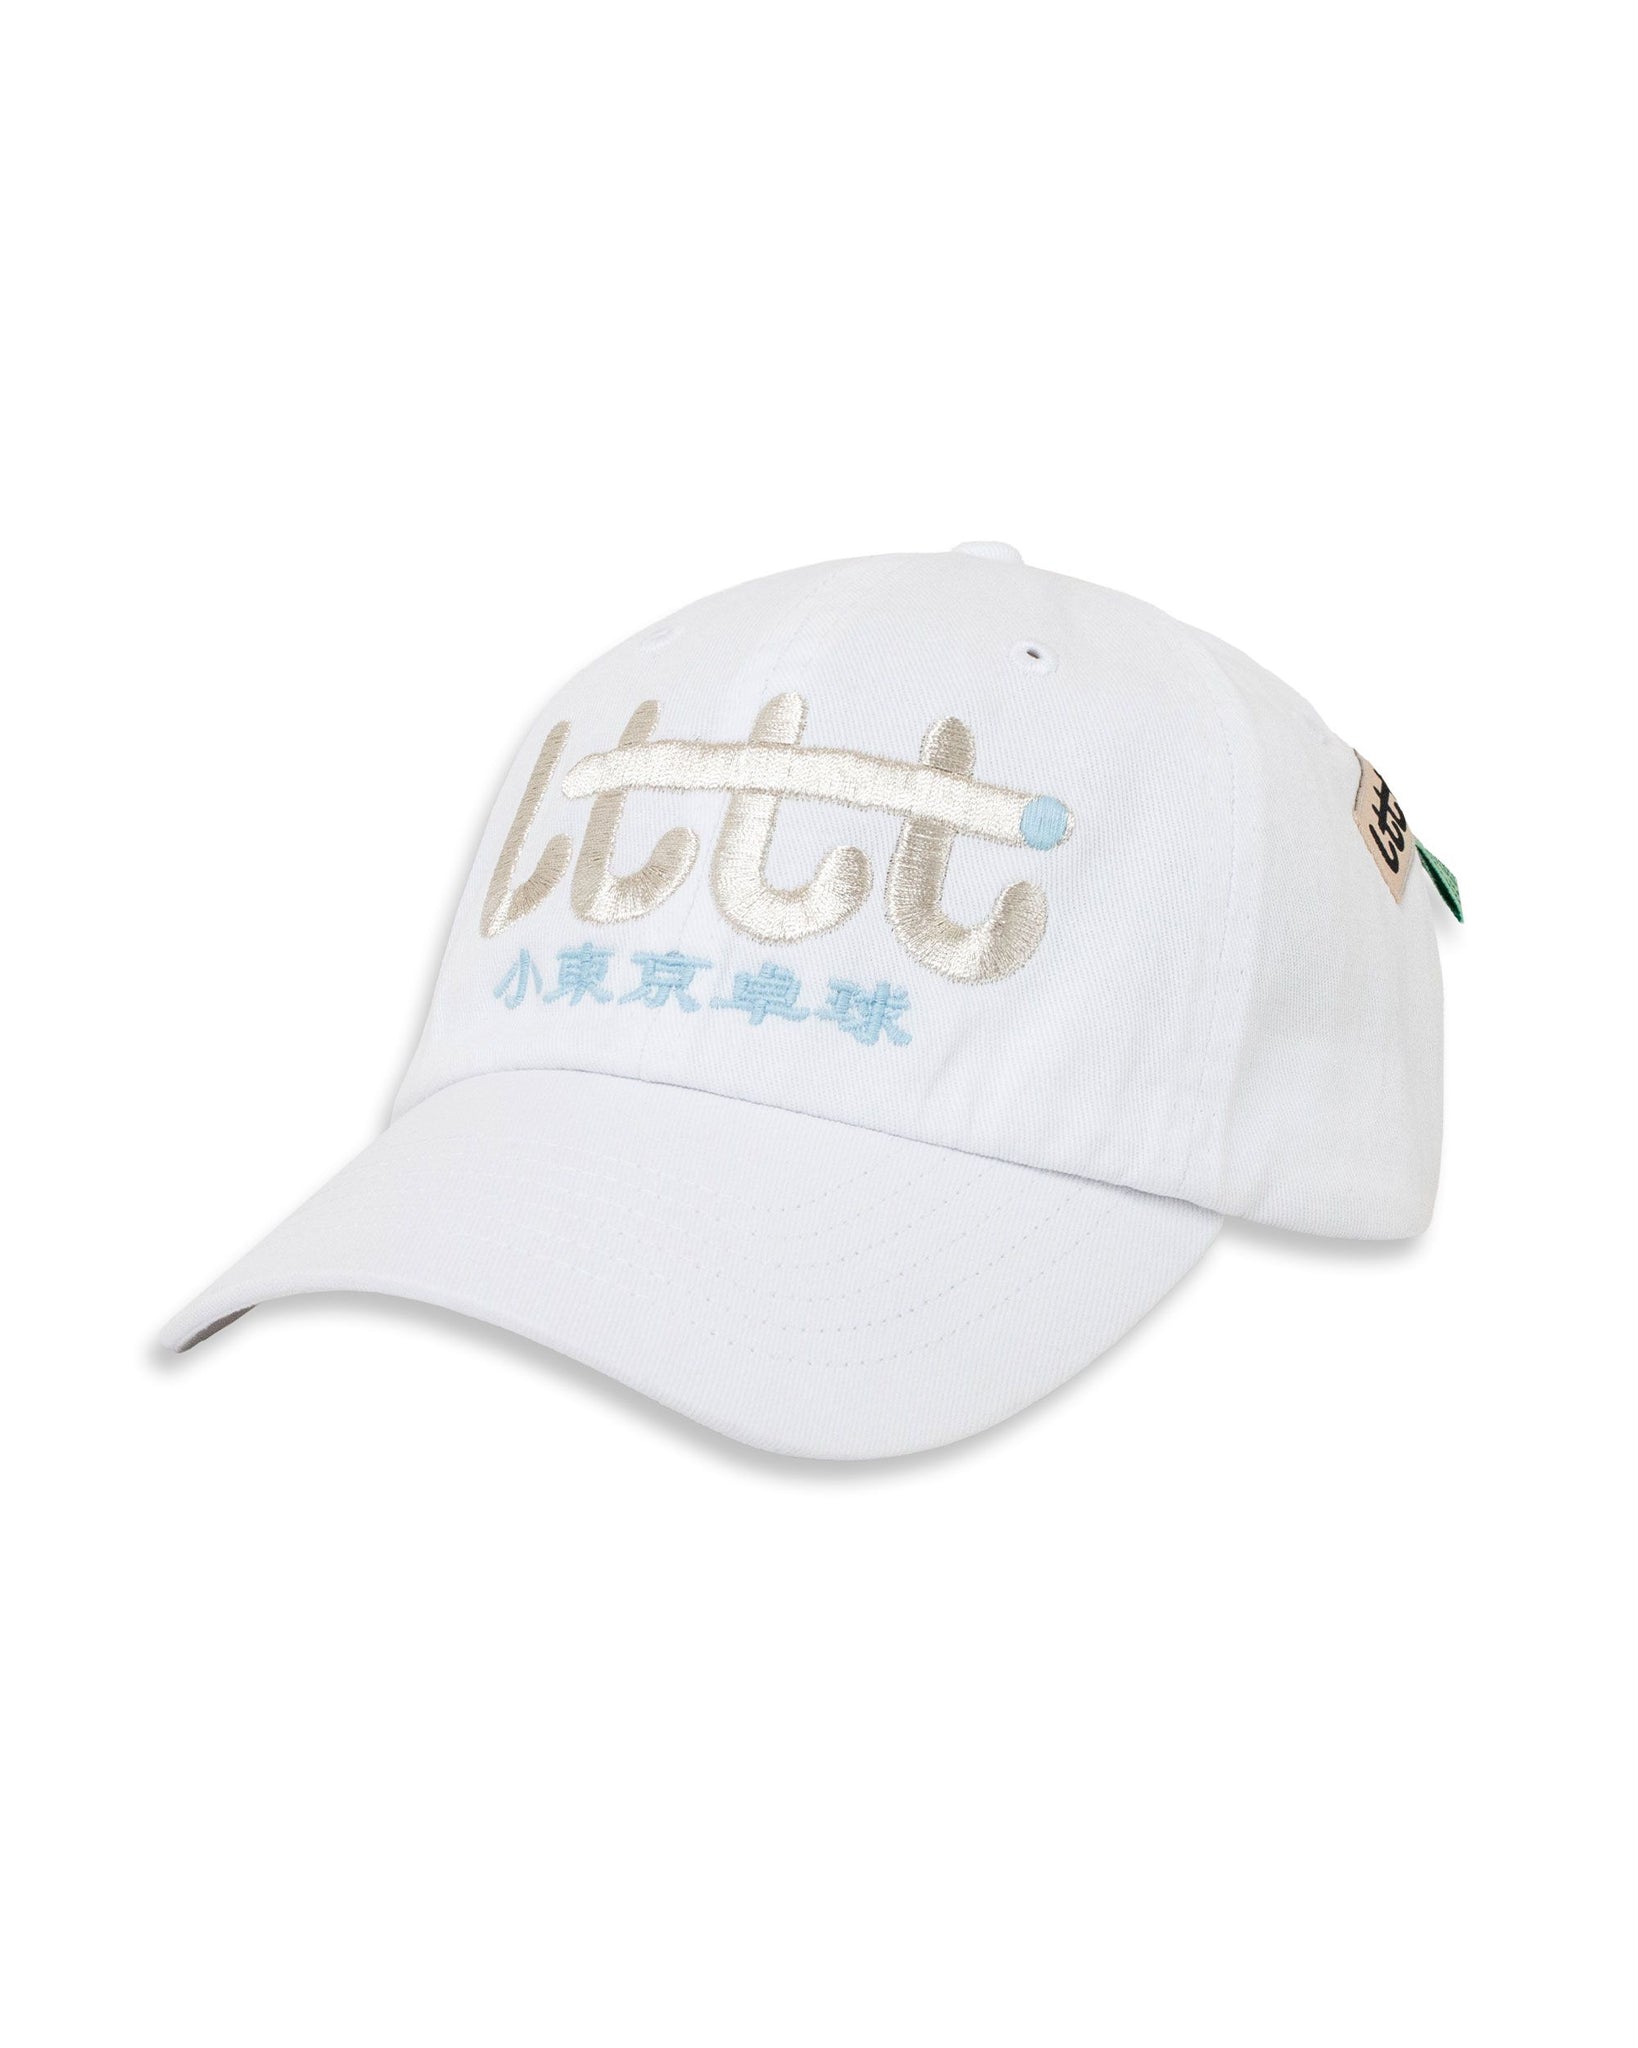 LTTT 小東京卓球 POCHE CAP （Domicile Tokyo） - キャップ